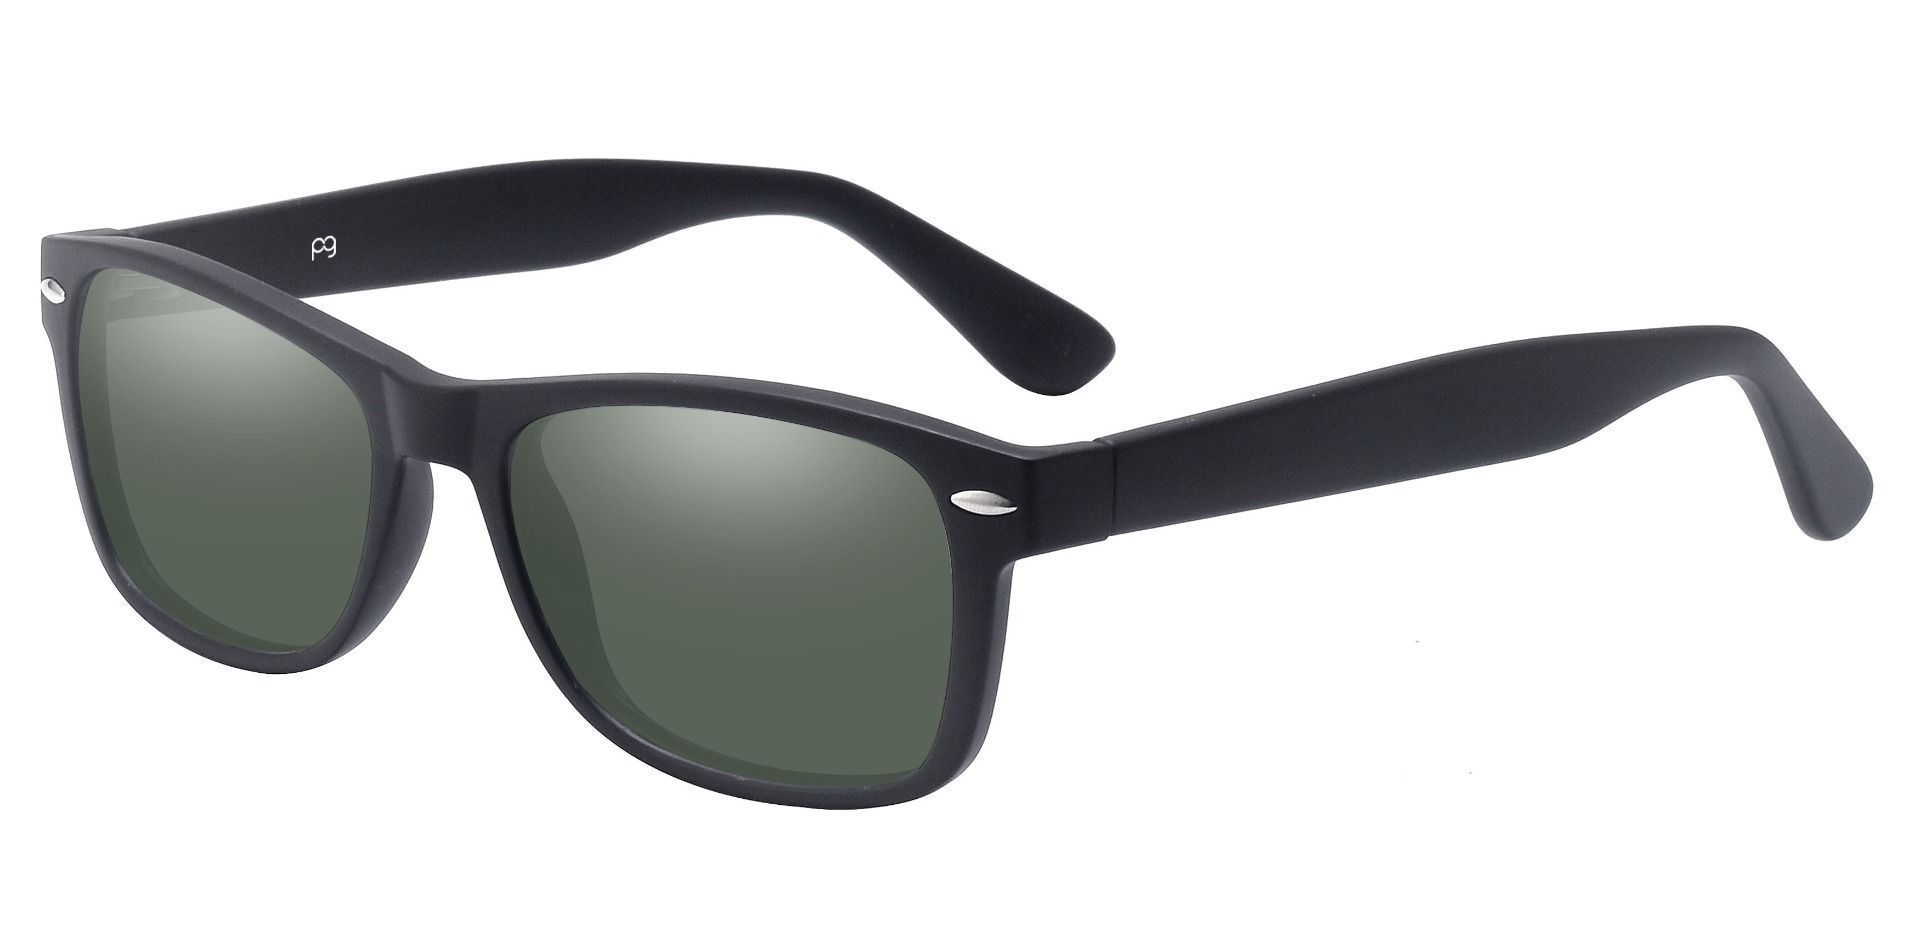 Kent Rectangle Prescription Sunglasses - Black Frame With Green Lenses